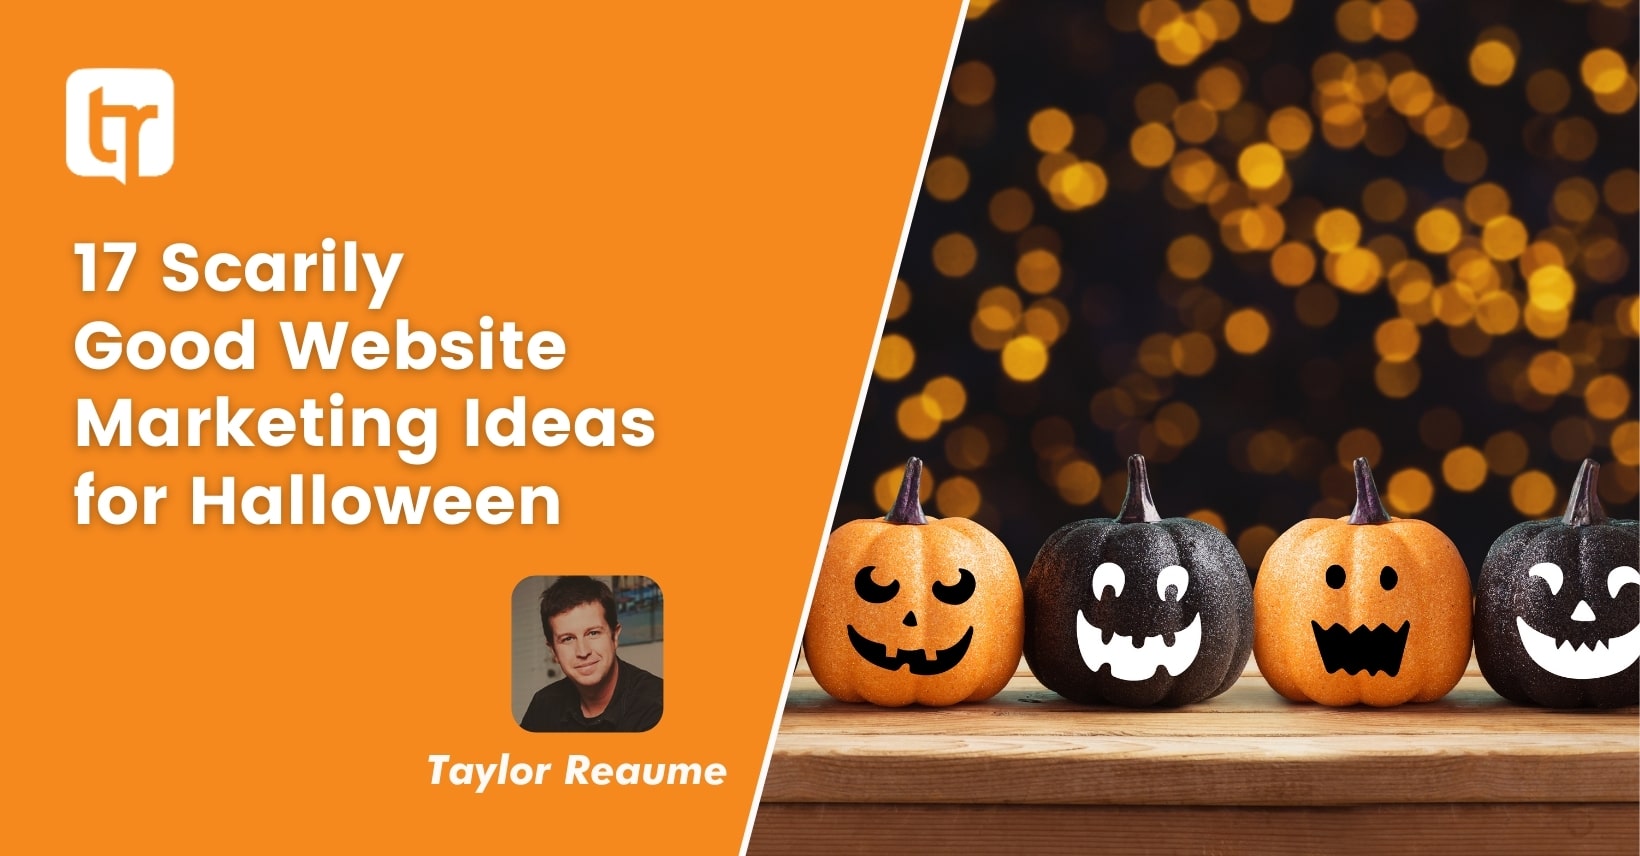 17 Scarily Good Website Marketing Ideas for Halloween